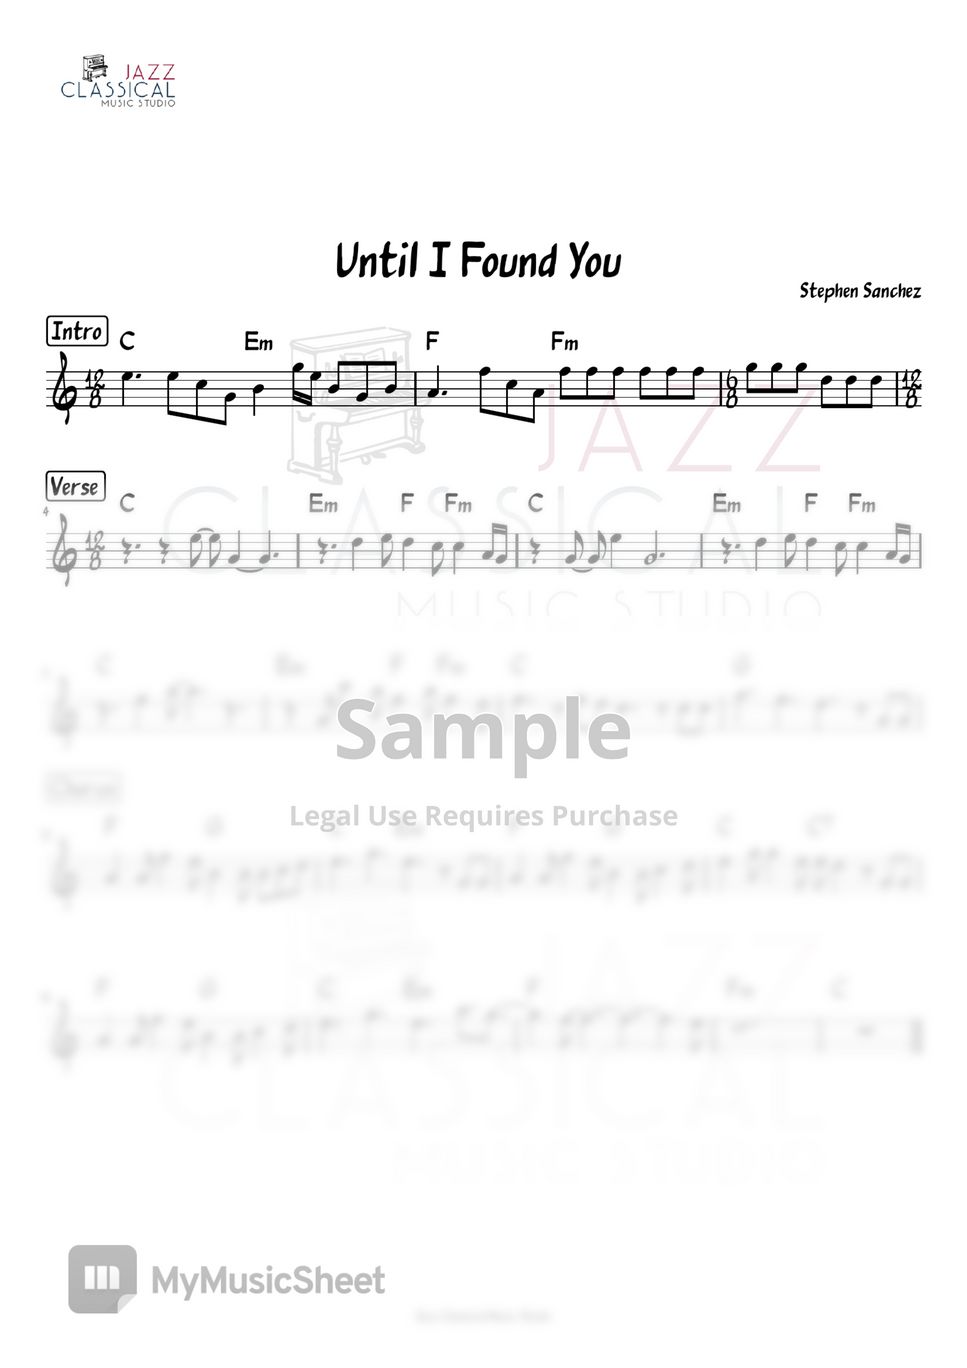 Stephen Sanchez - Until I Found You (no lyrics) by Jazz Classical Music Studio